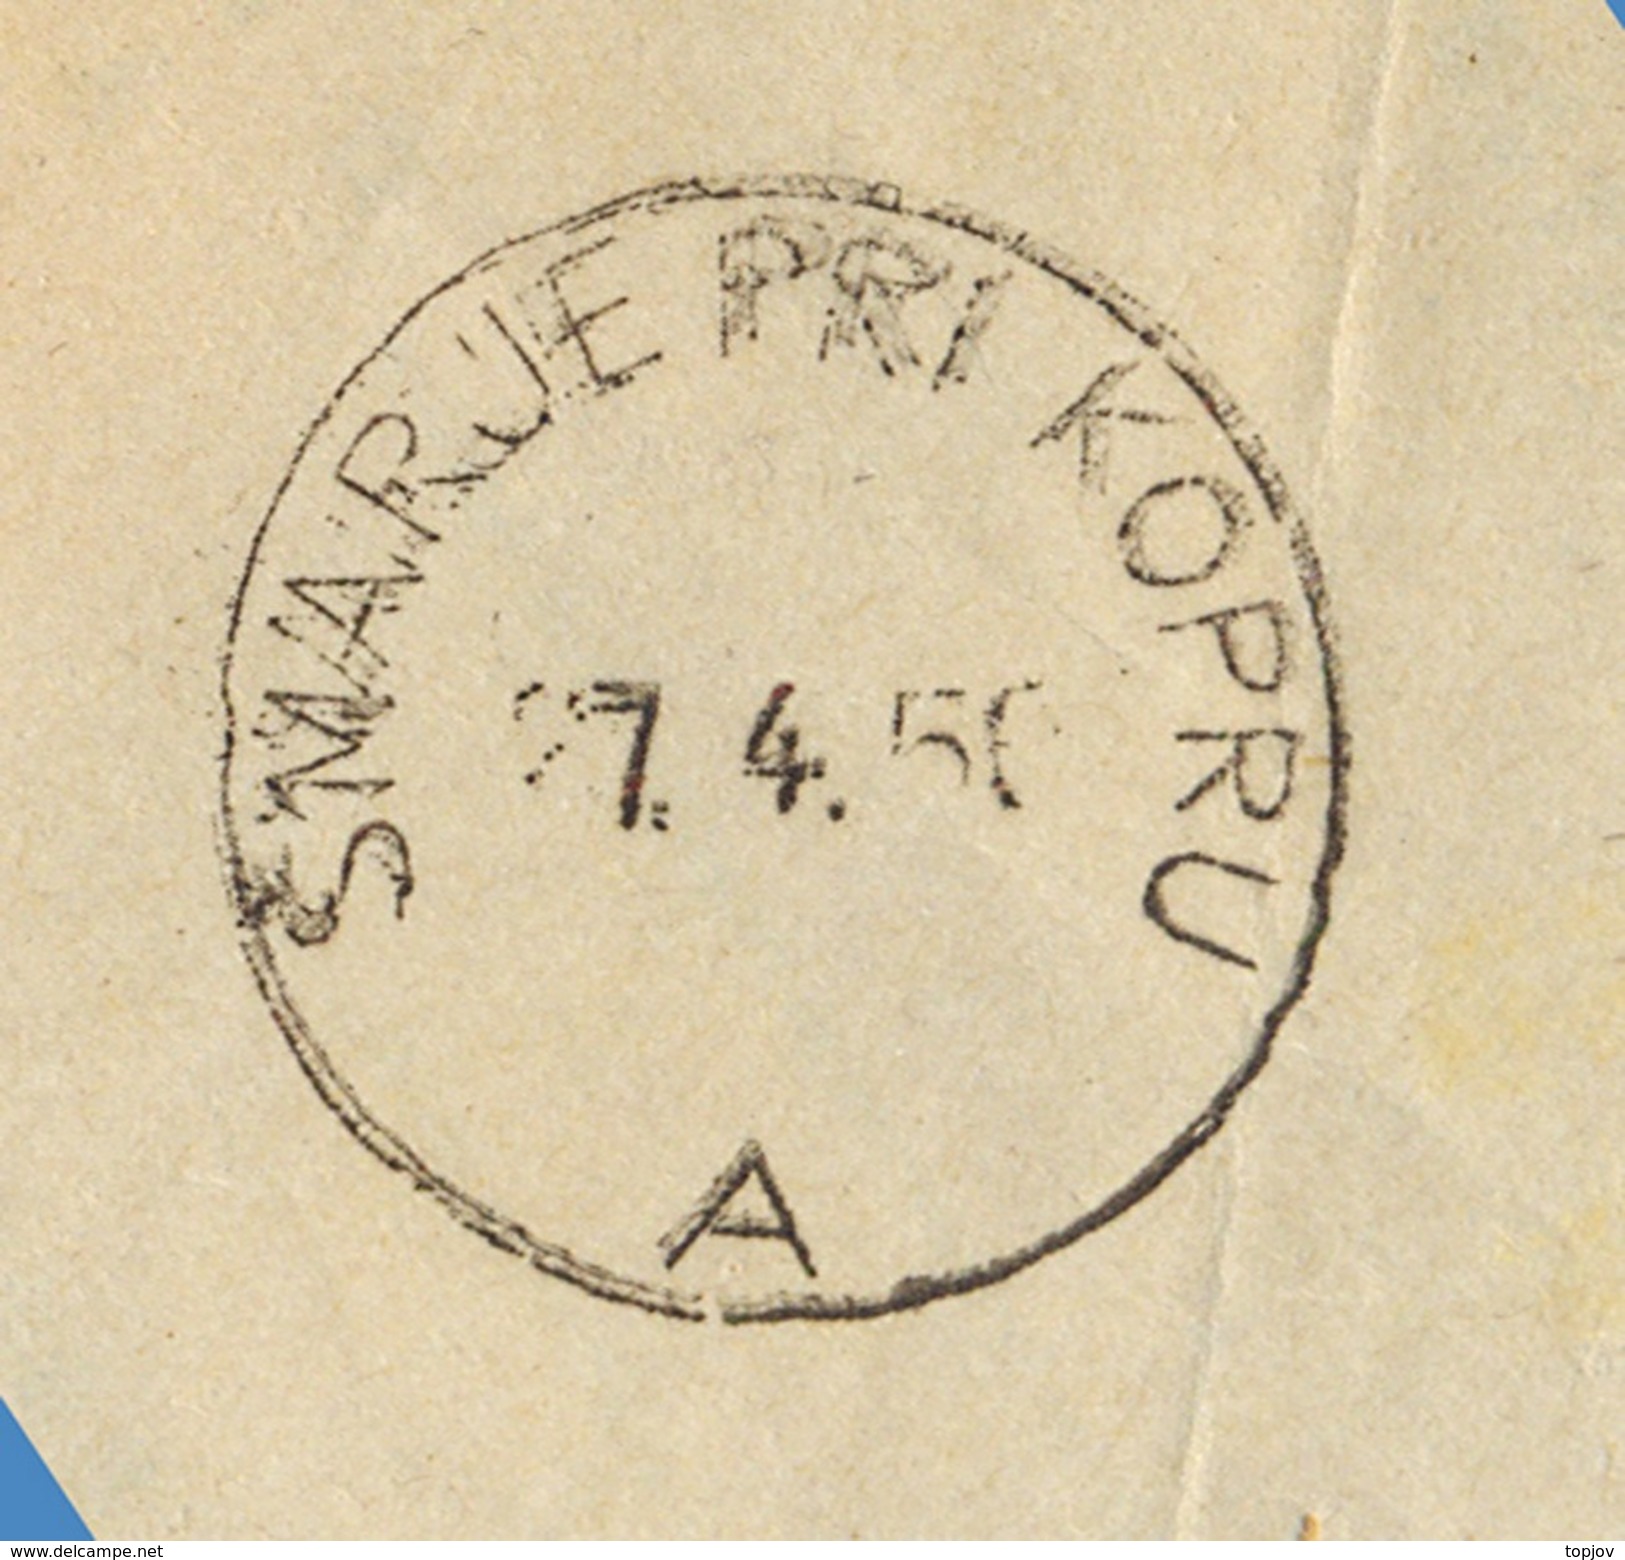 TRIESTE B - SLOVENIA - ISTRIA - BEES Stamp On PRINTED MATTER To SMARJE Pri KOPRU - 1950 - Poststempel